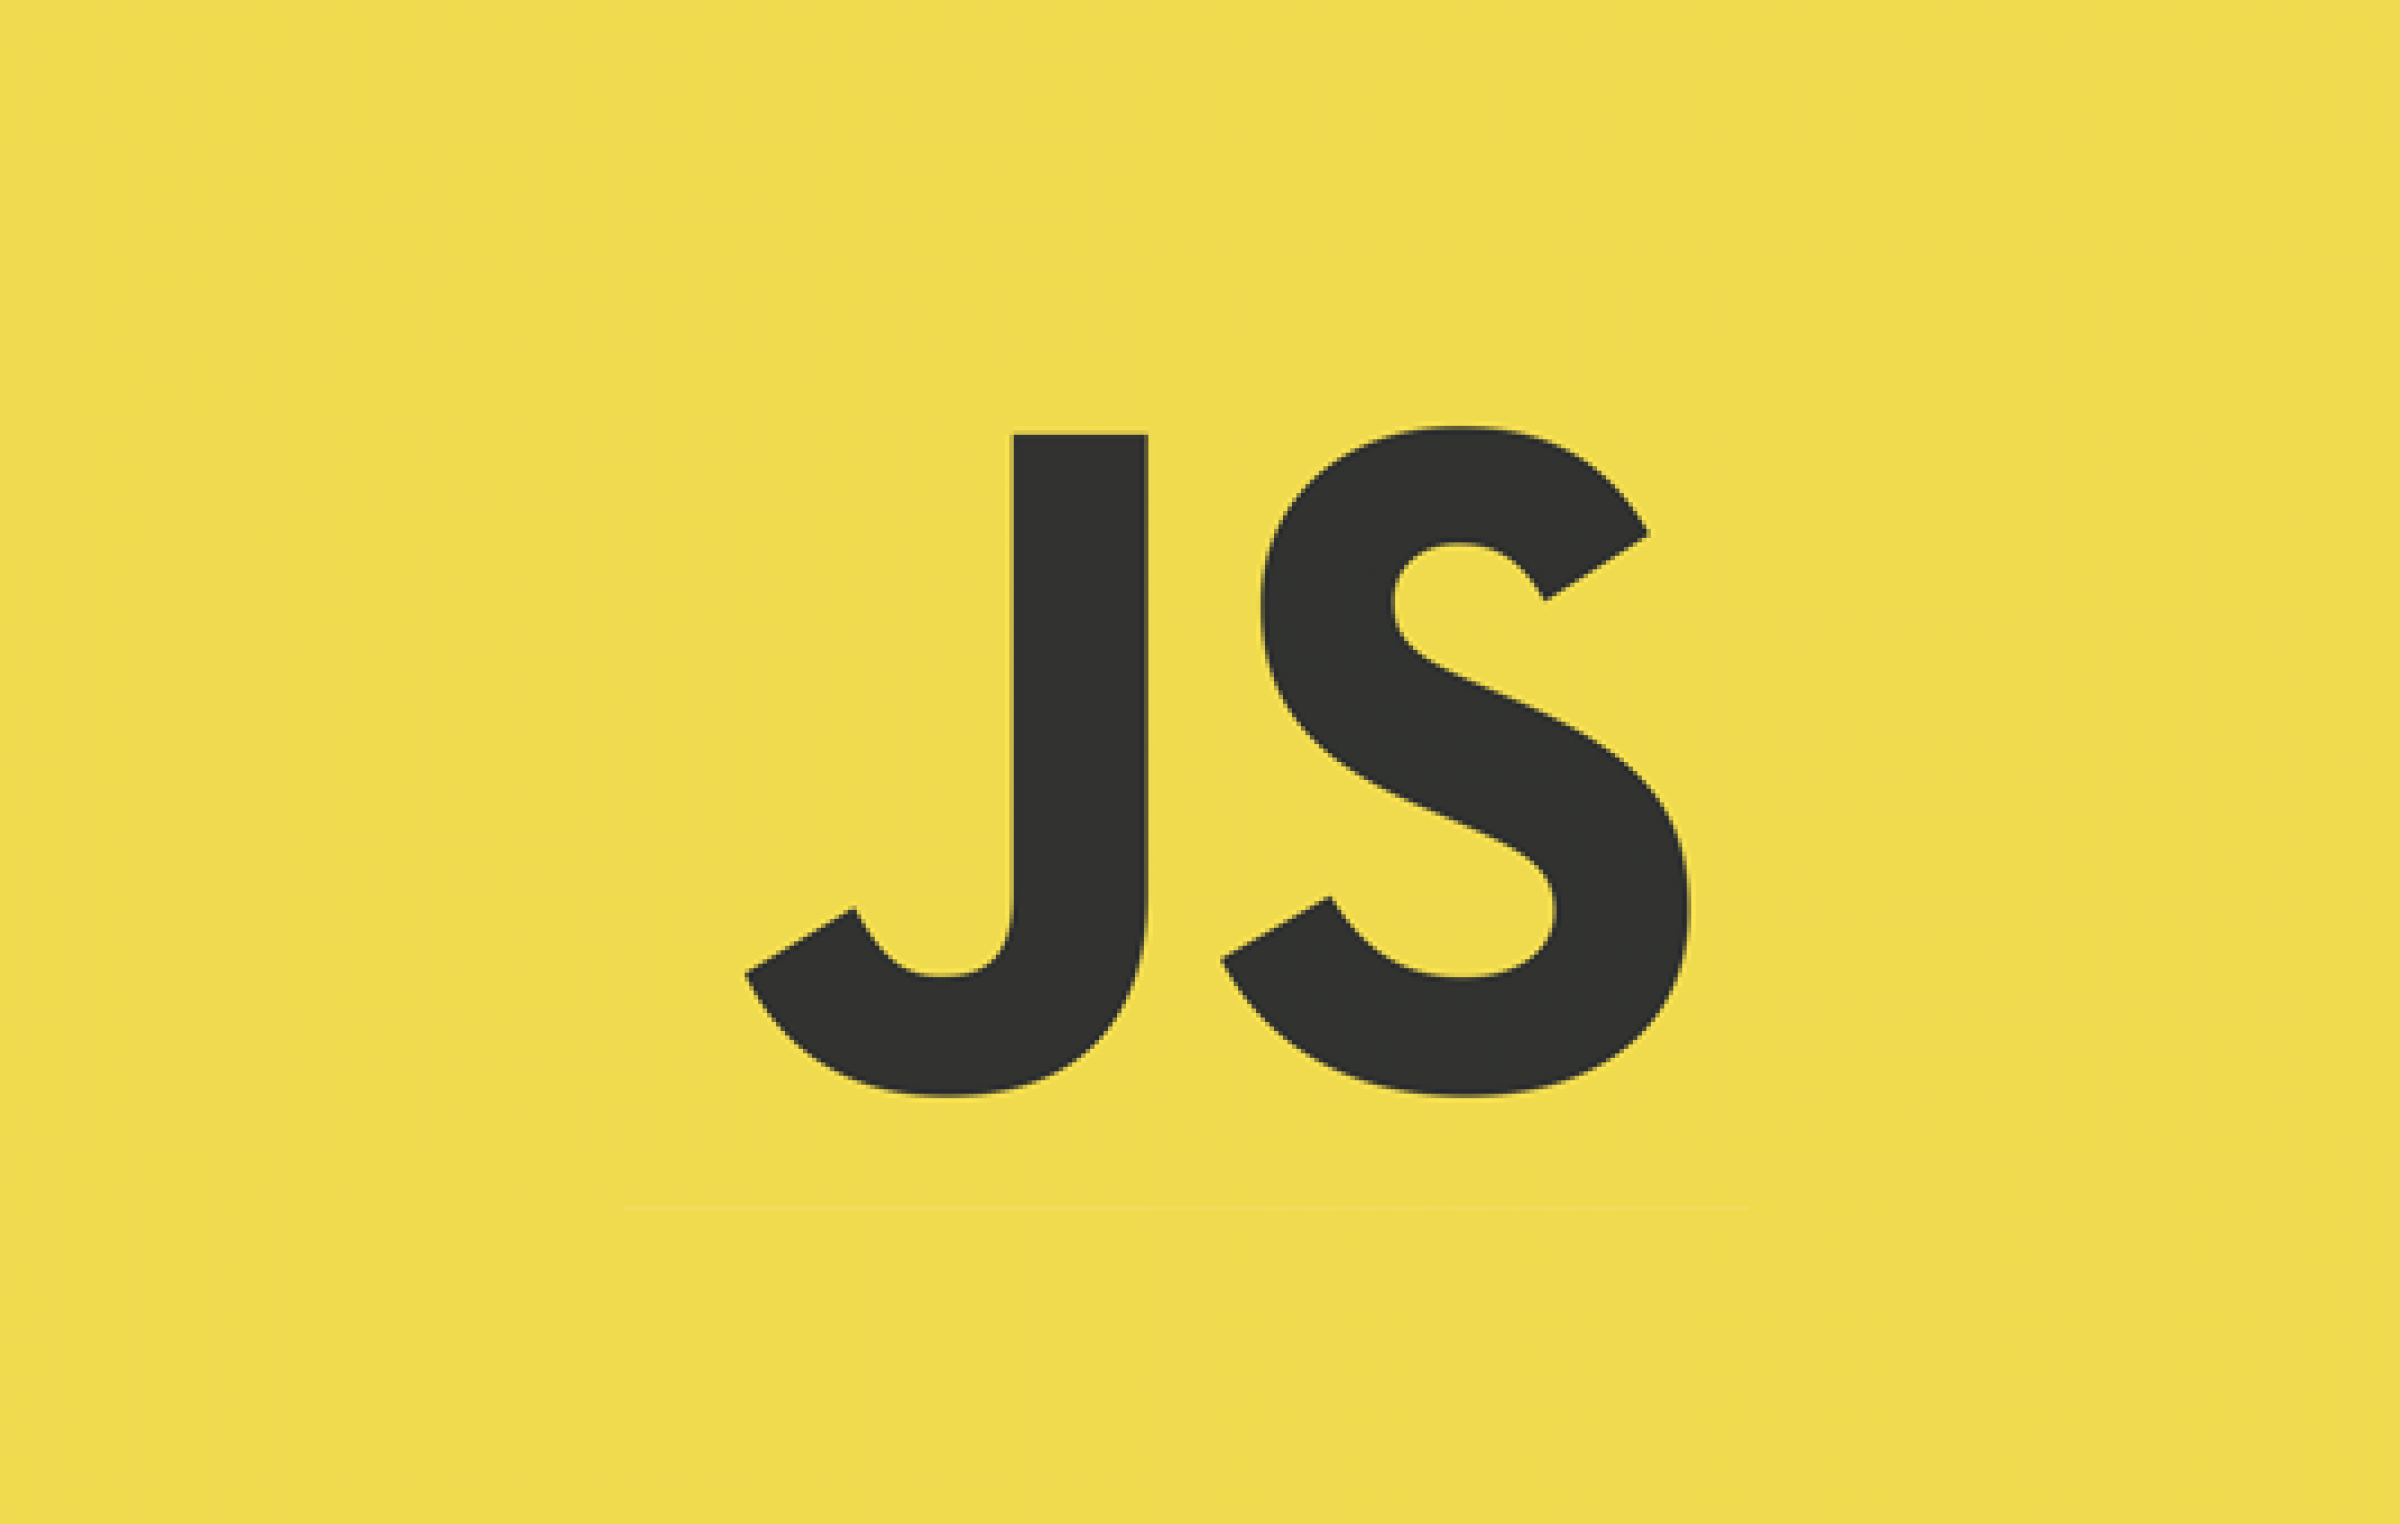 Javascript технологии. Значок джава скрипт. Js картинки. JAVASCRIPT логотип. Js язык программирования.